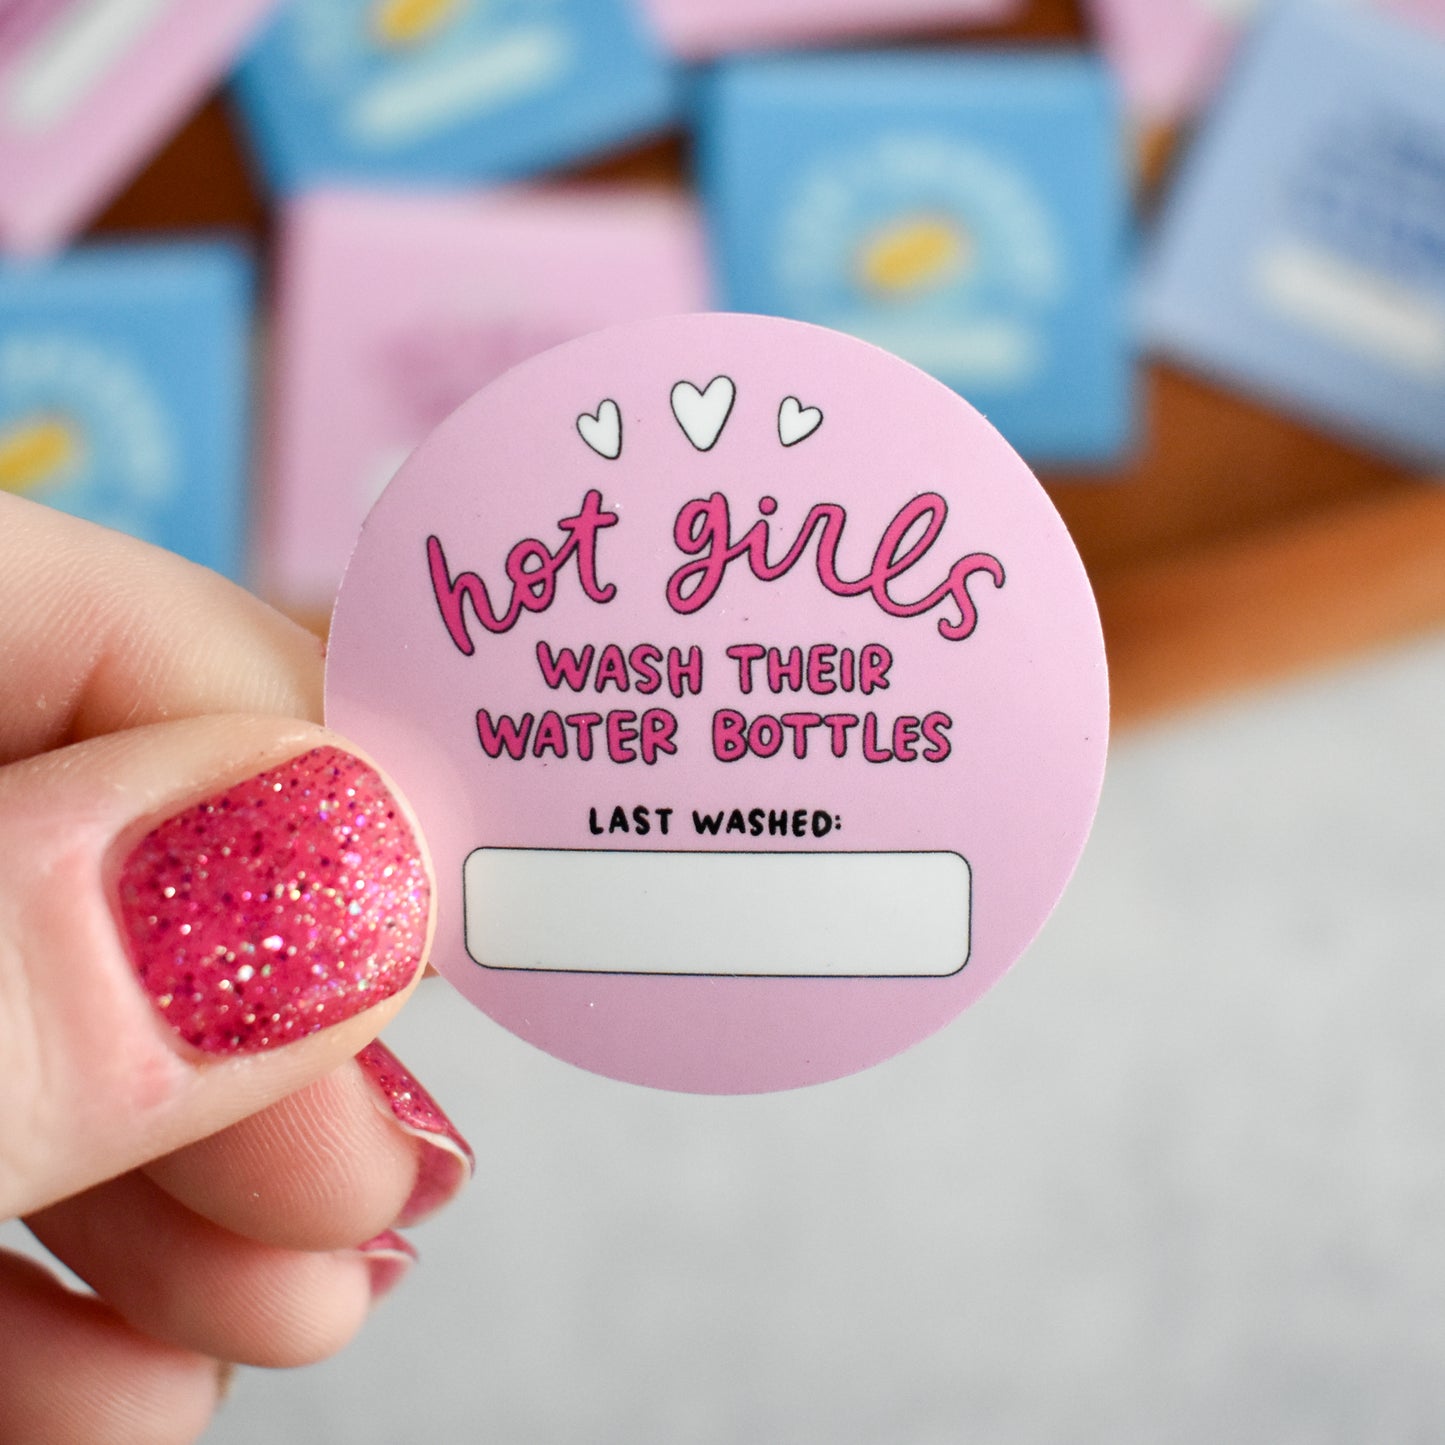 Hot Girls Last Washed Sticker (Dry-Erase)